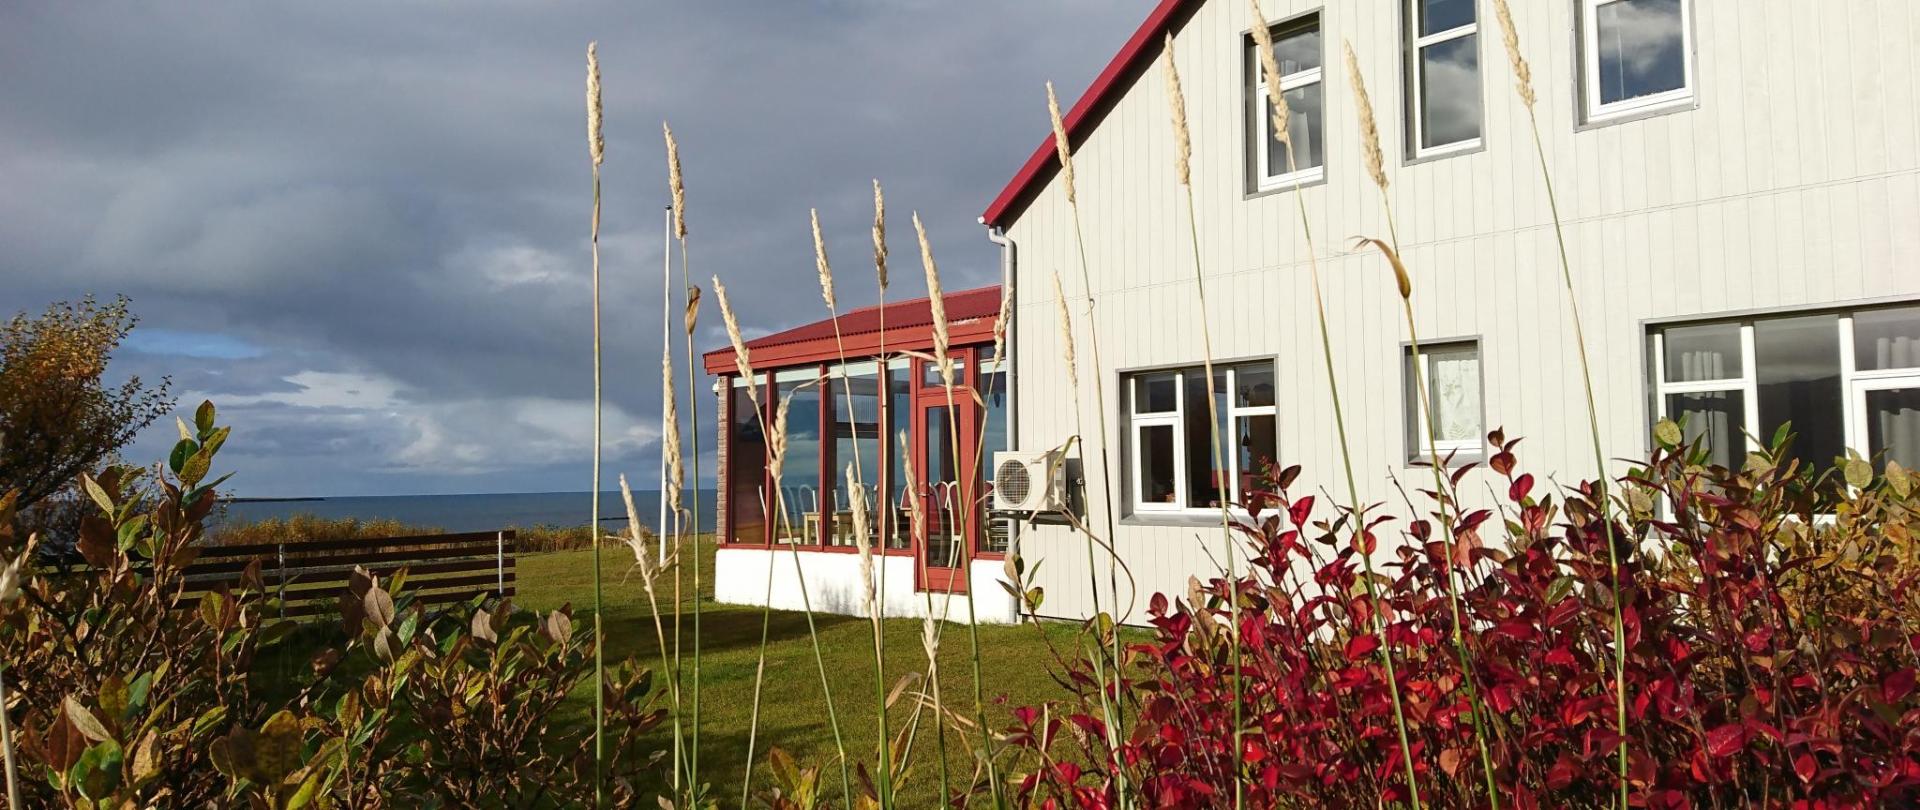 Sudur Bár Guesthouse Grundarfjordur Iceland - 